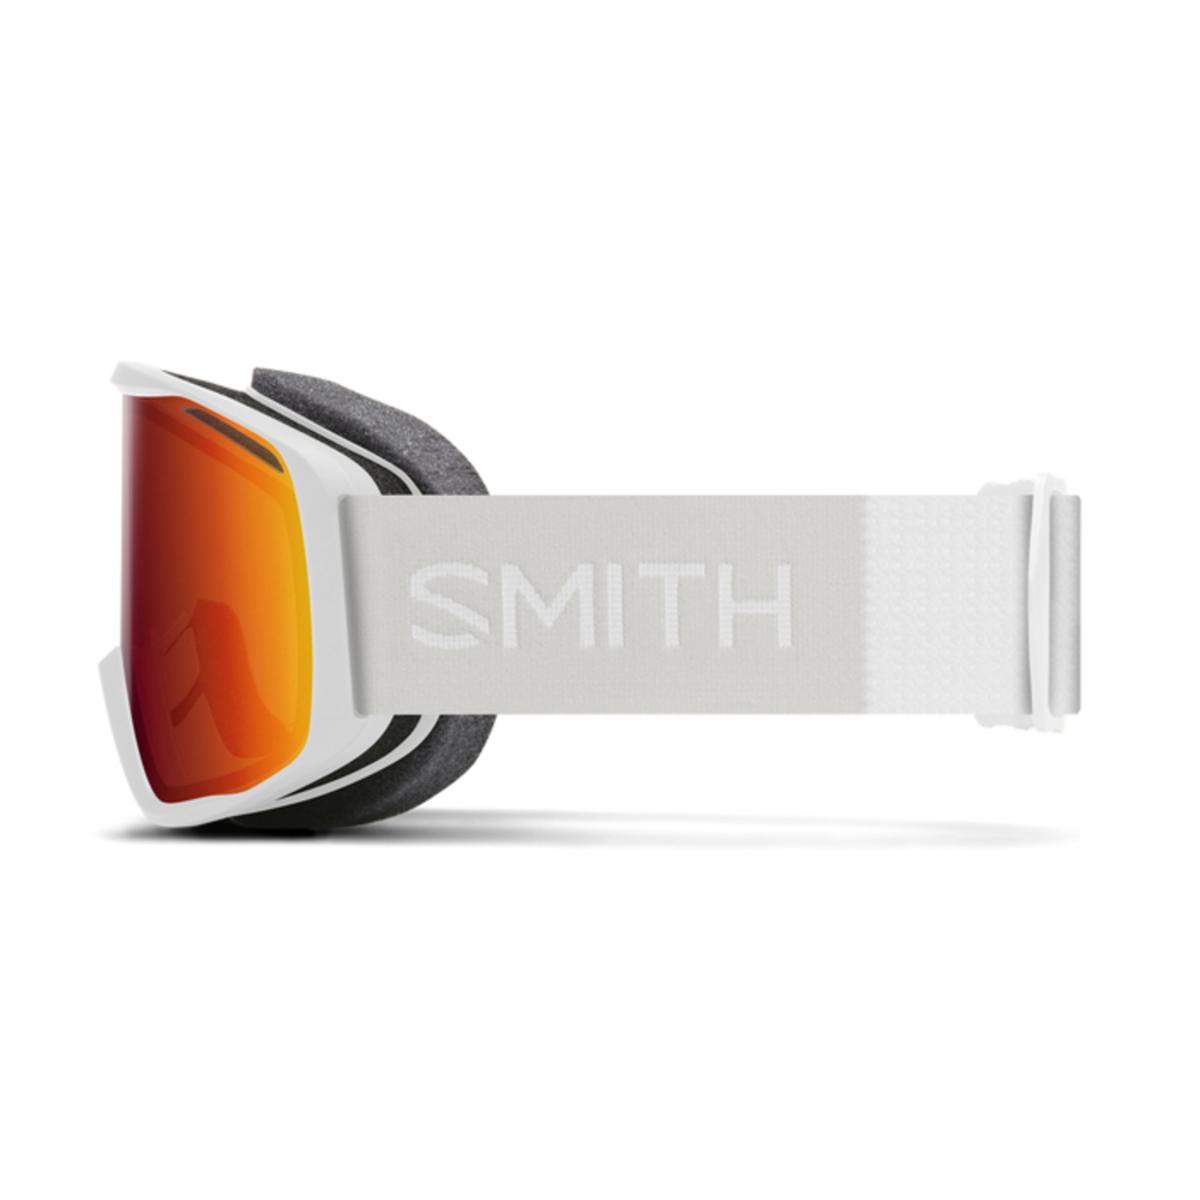 Smith Optics Rally Goggles Red Sol-X Mirror - White Frame